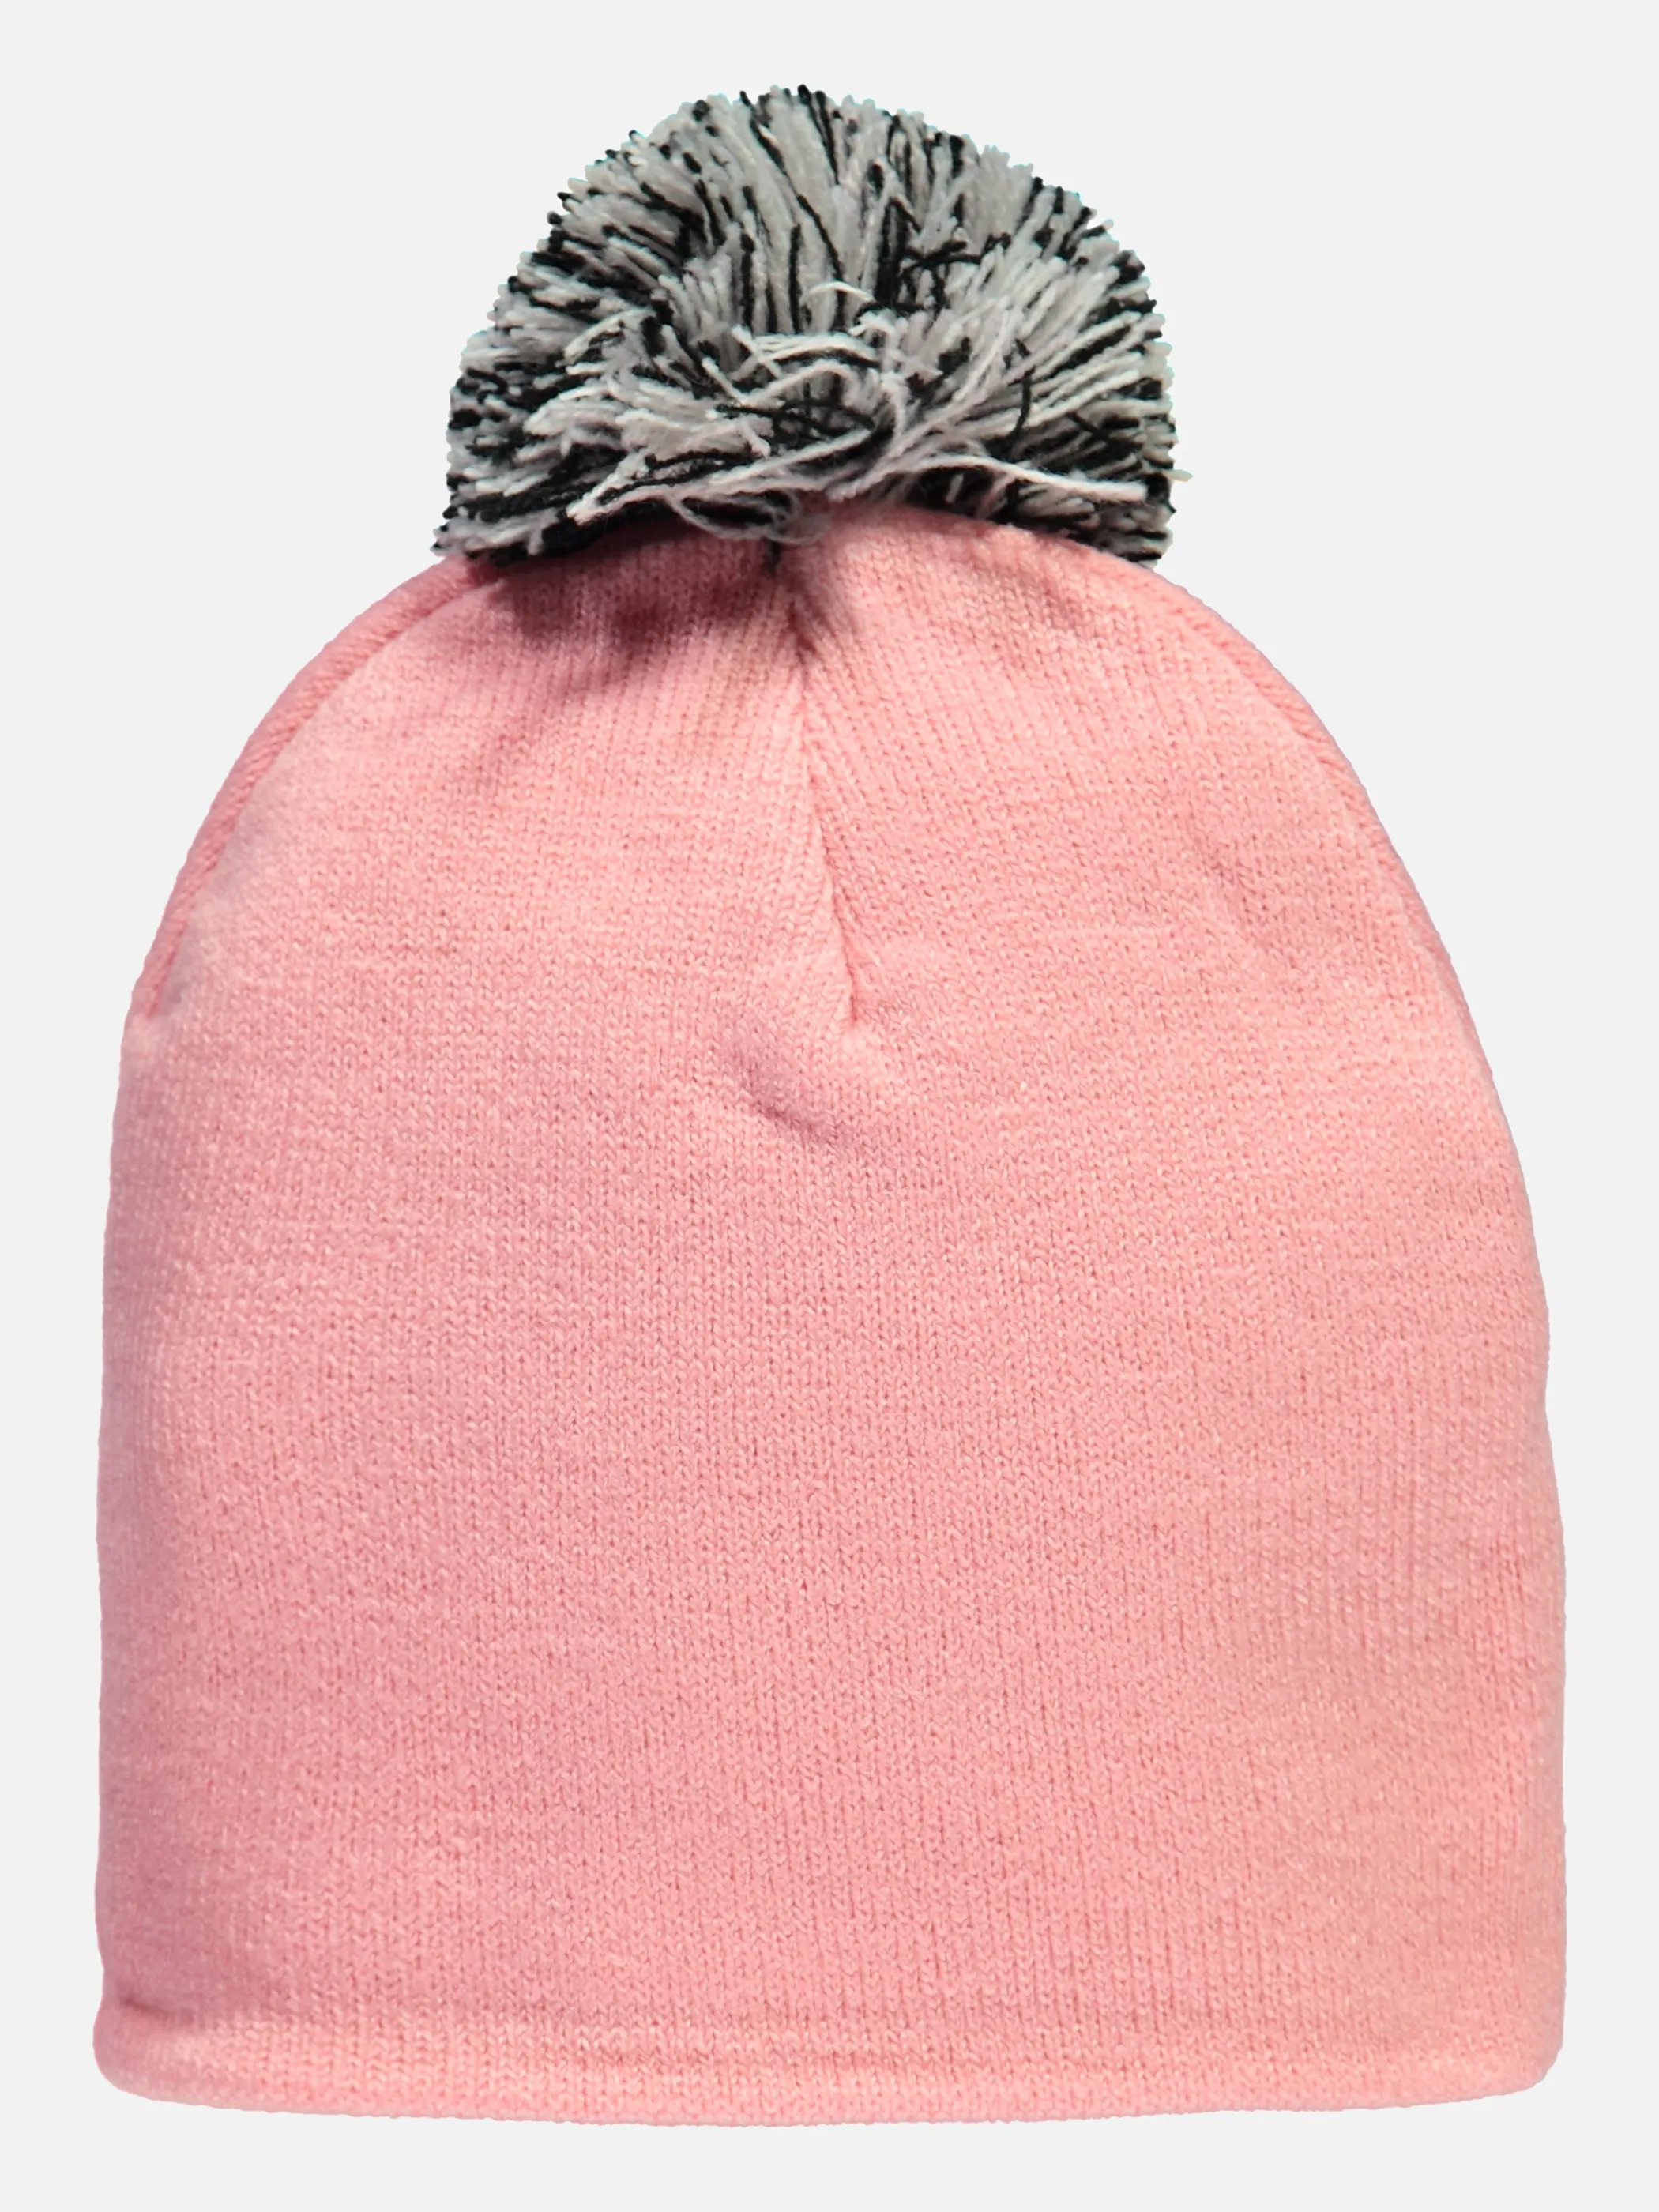 Bubble Gum BG Mütze in rose mit Pompom Rosa 844981 ROSE 2